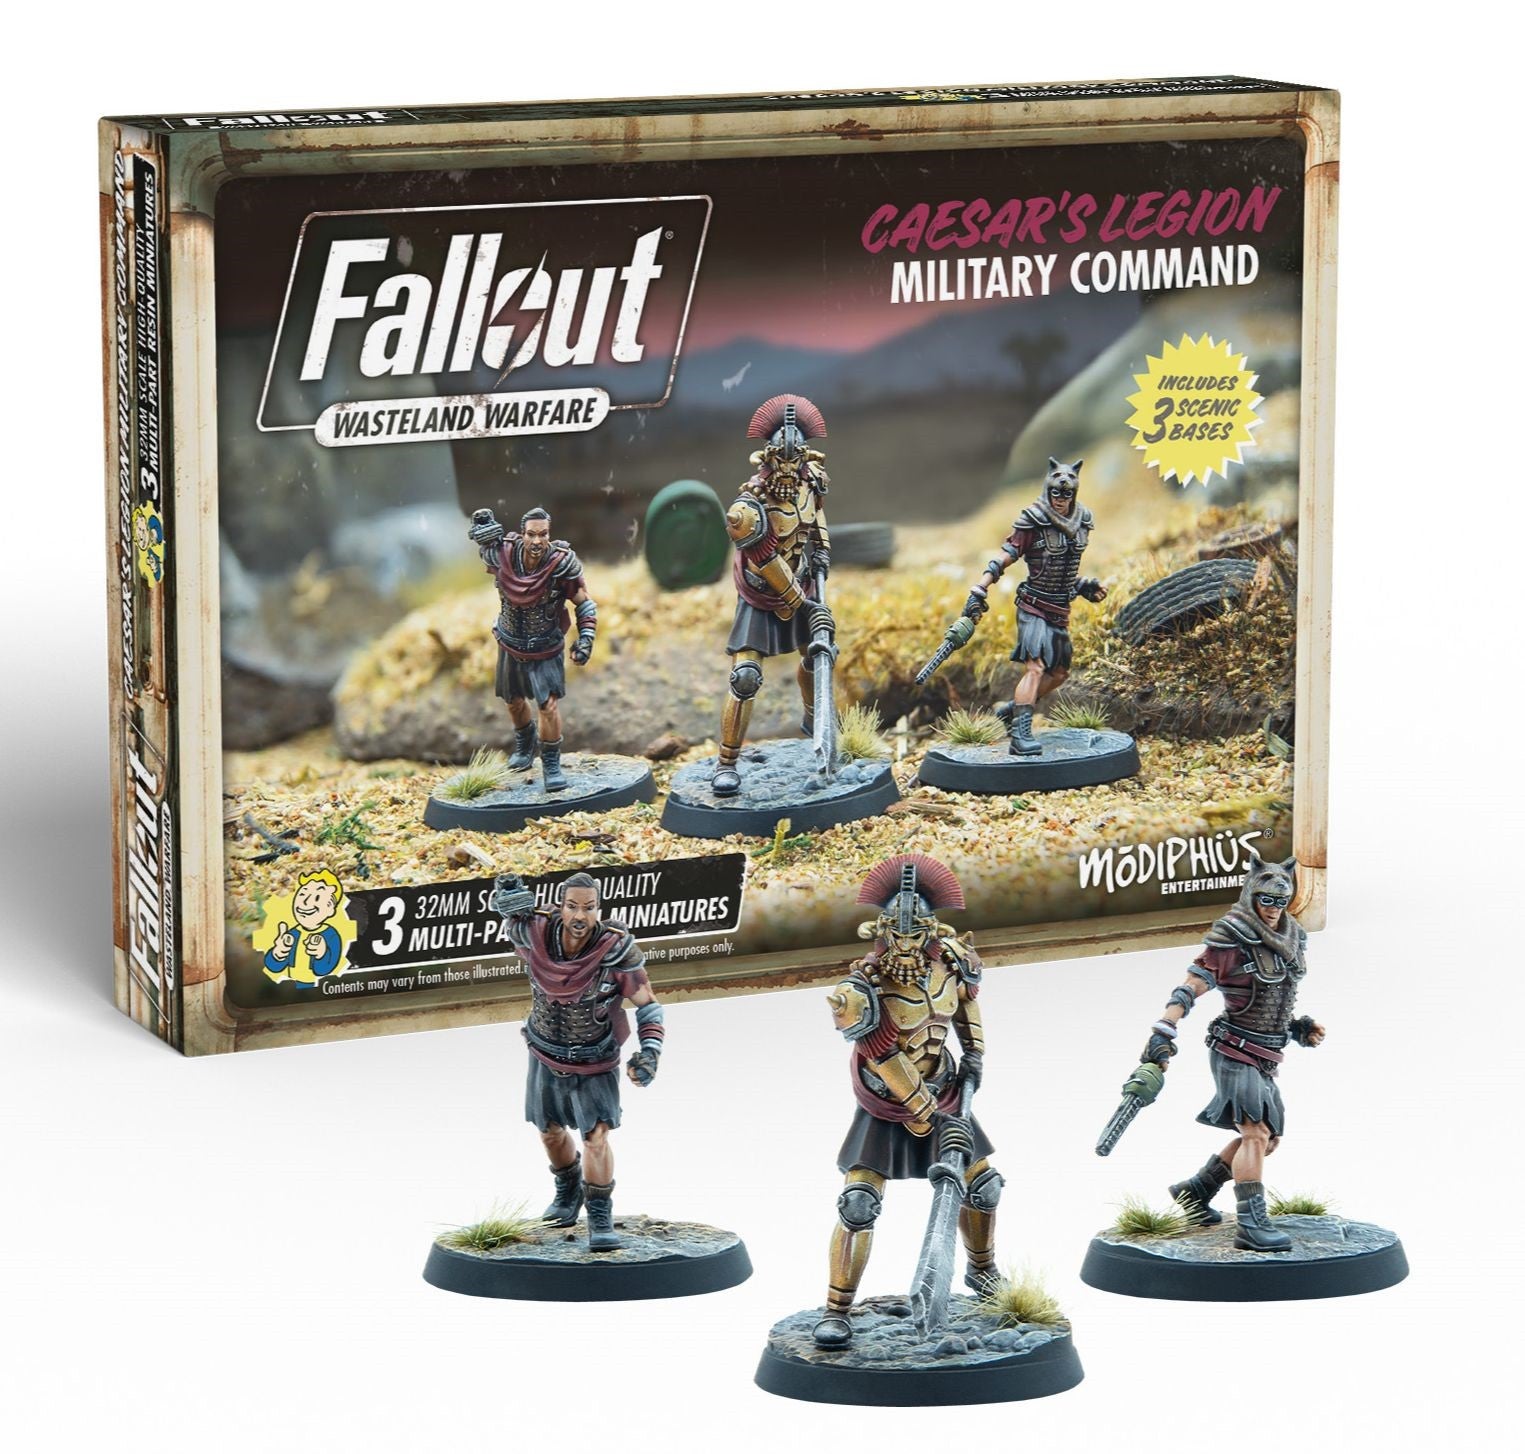 Fallout Wasteland Warfare Miniatures - Casesars Legion Military Command